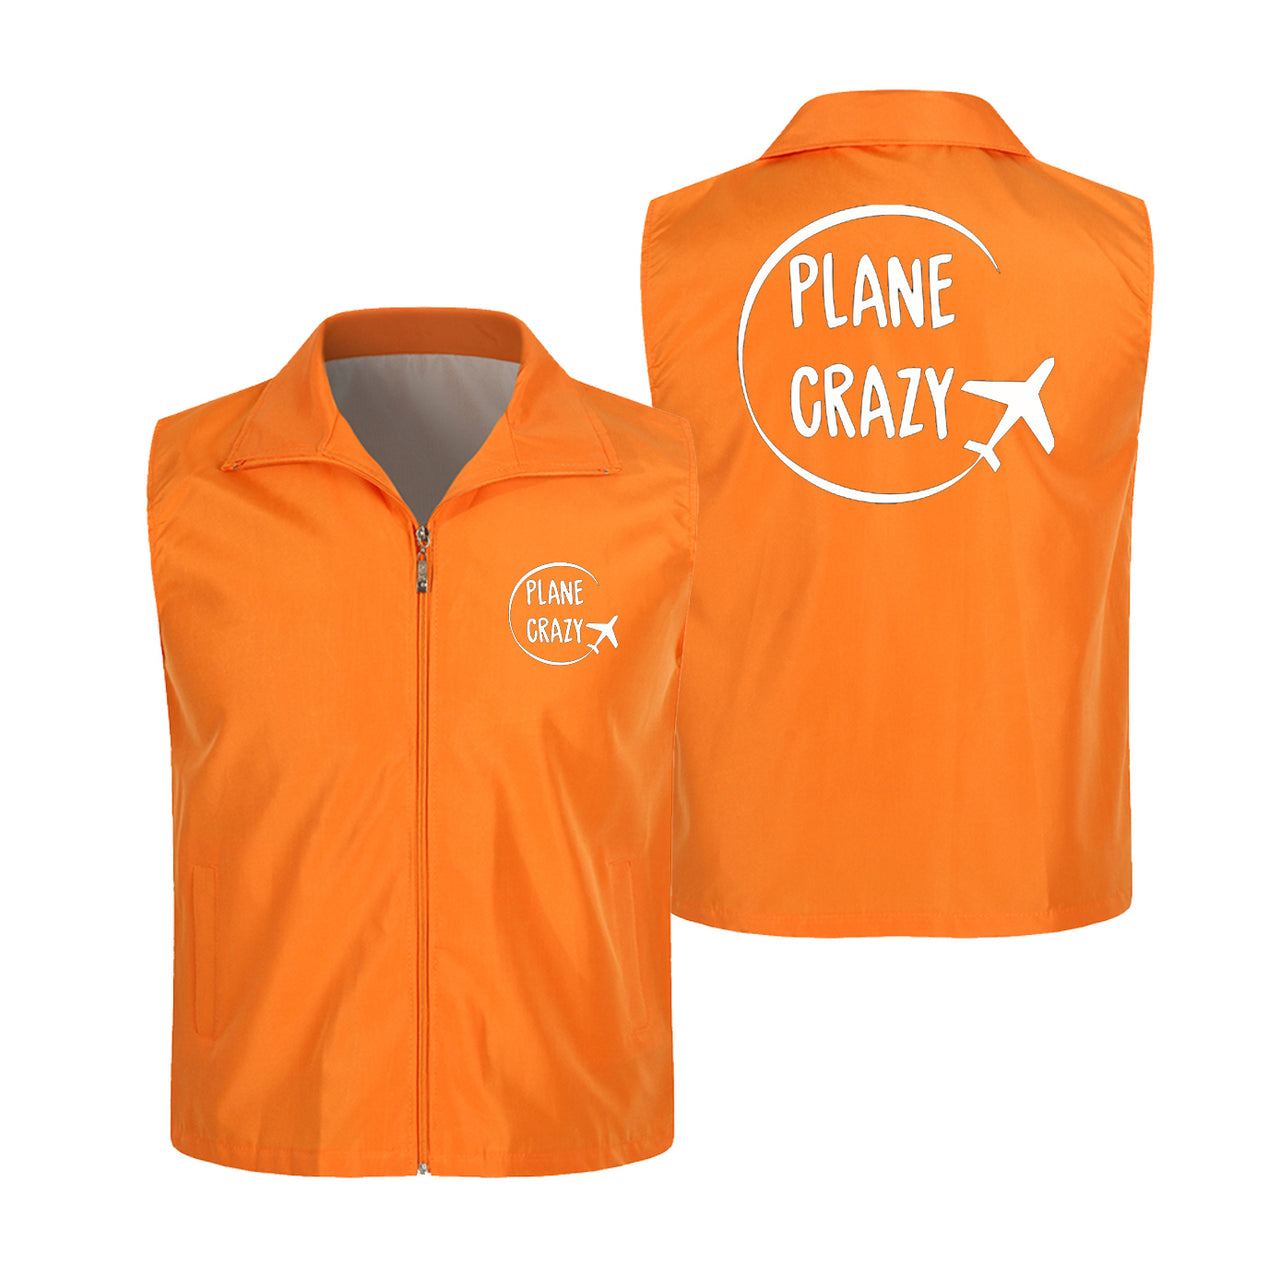 Plane Crazy Designed Thin Style Vests